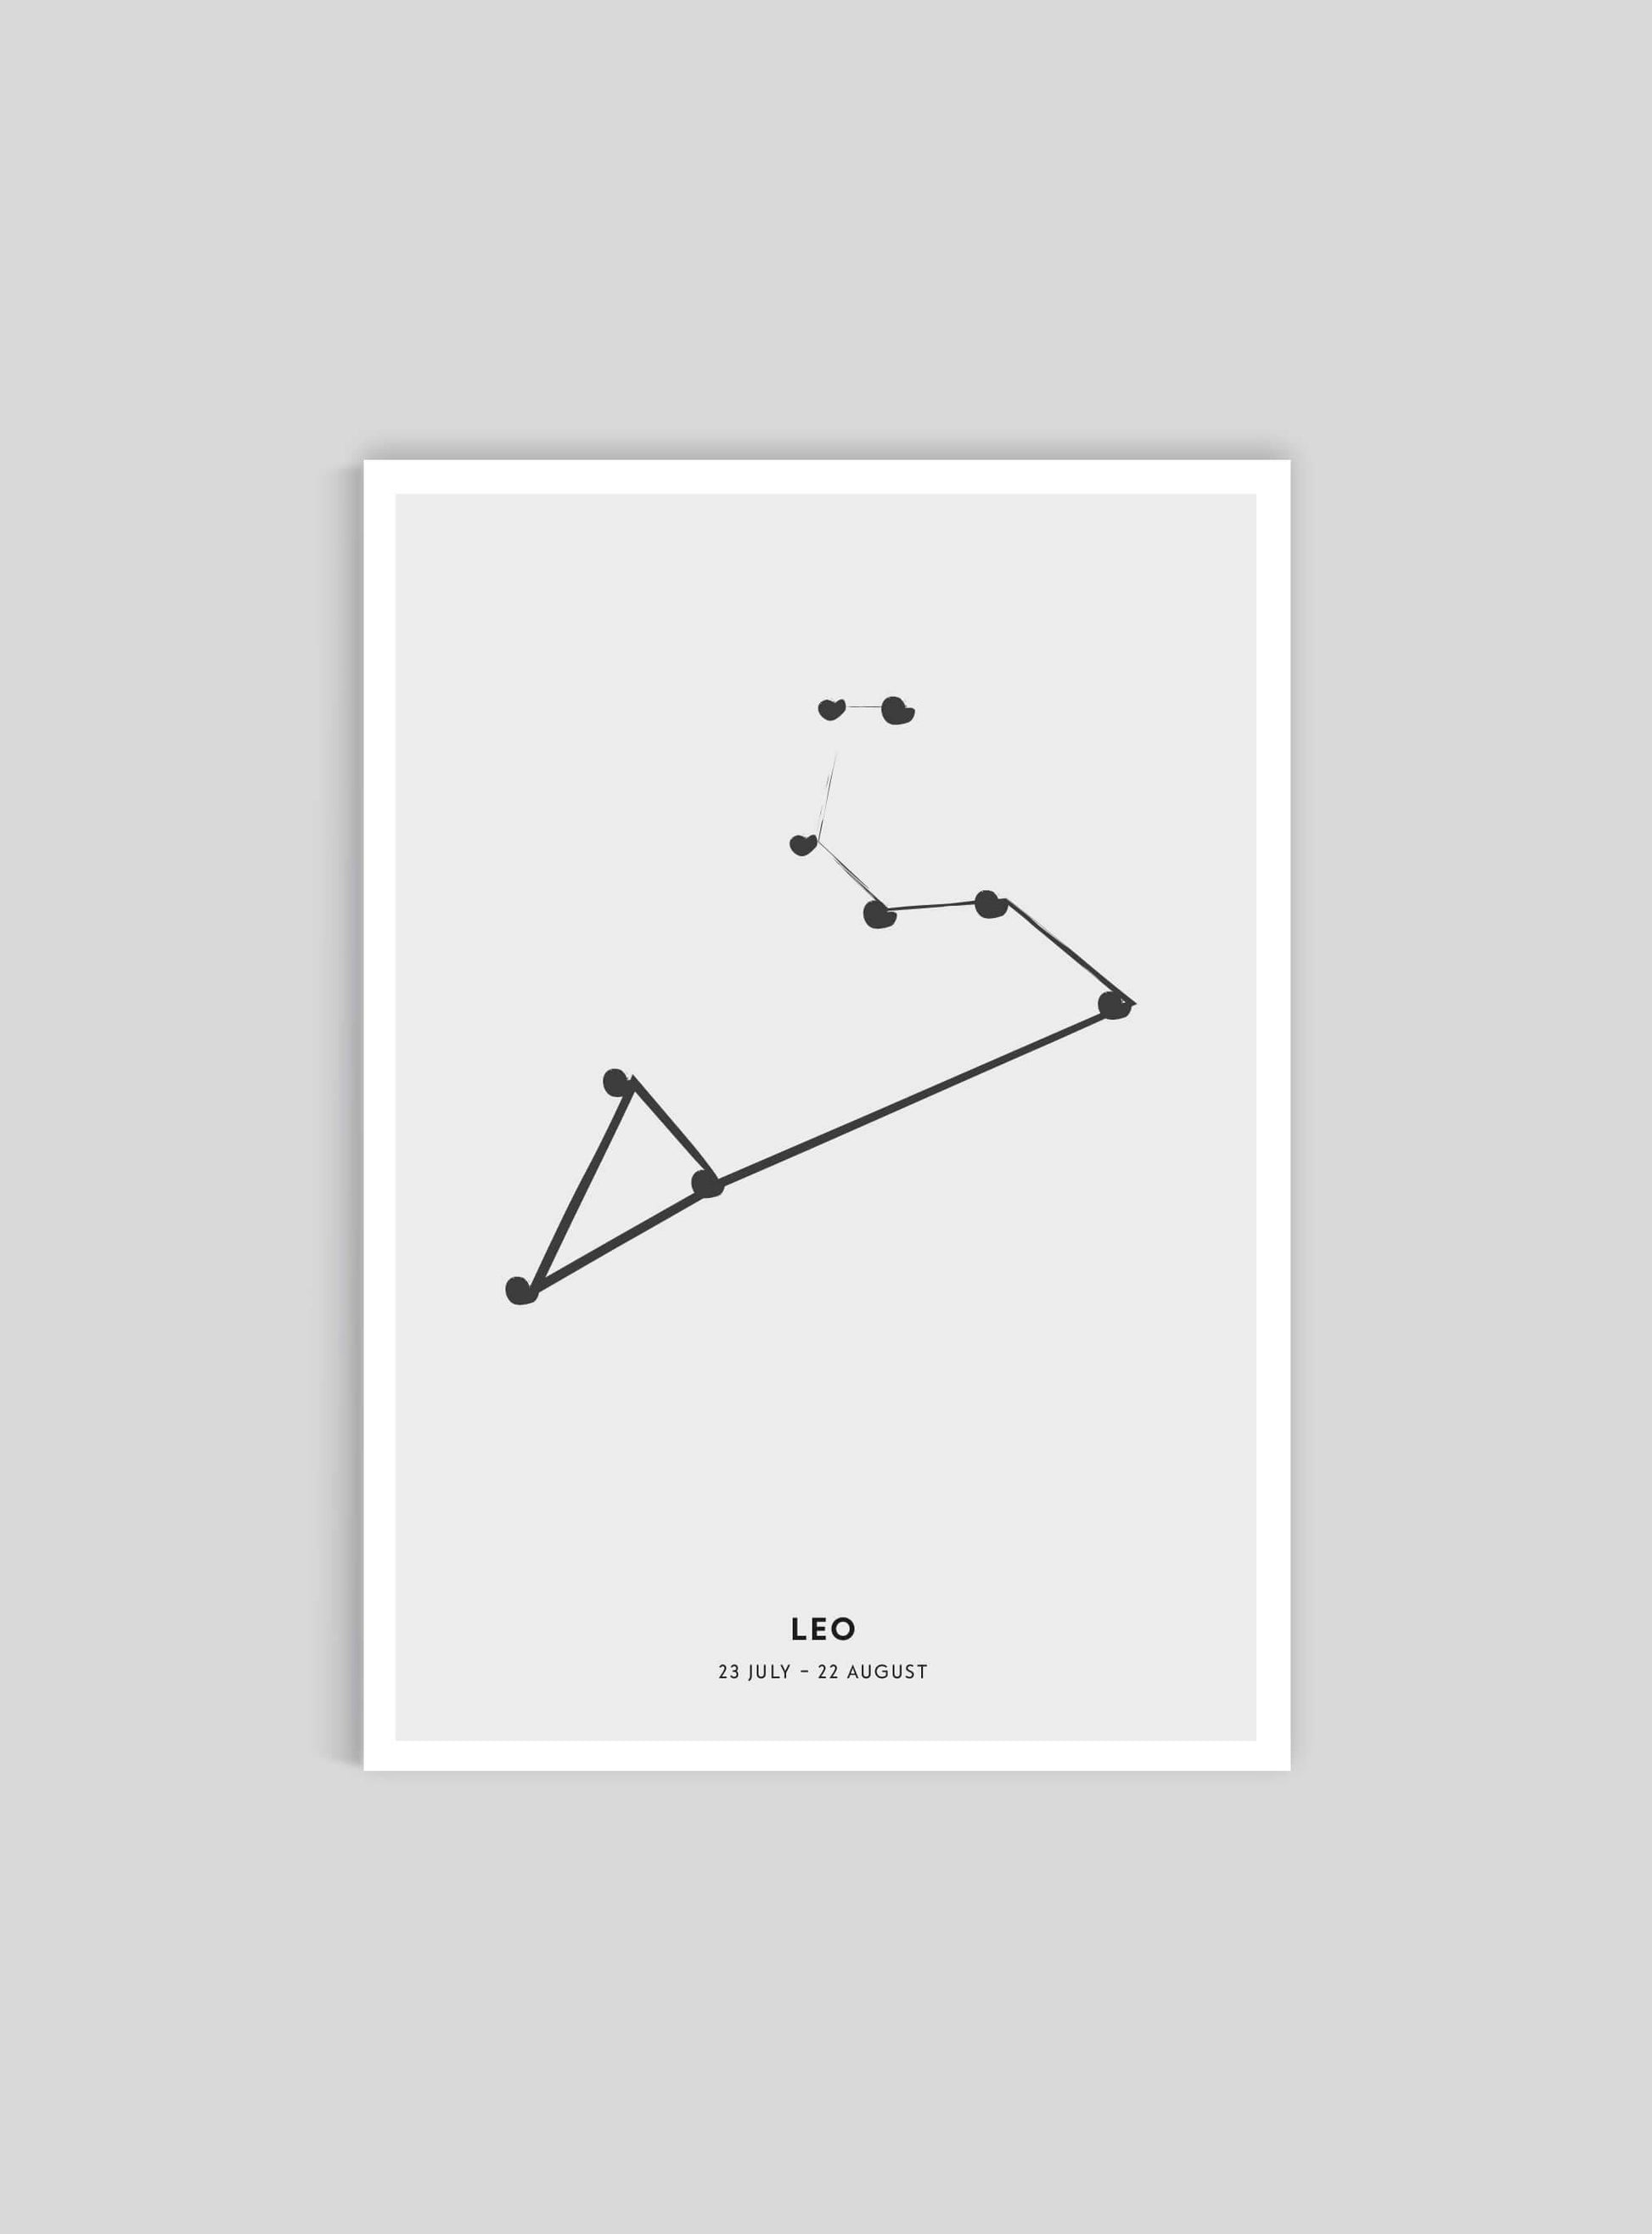 Zodiac sign Leo - Lejonet - Mini print A5 - Kunskapstavlan